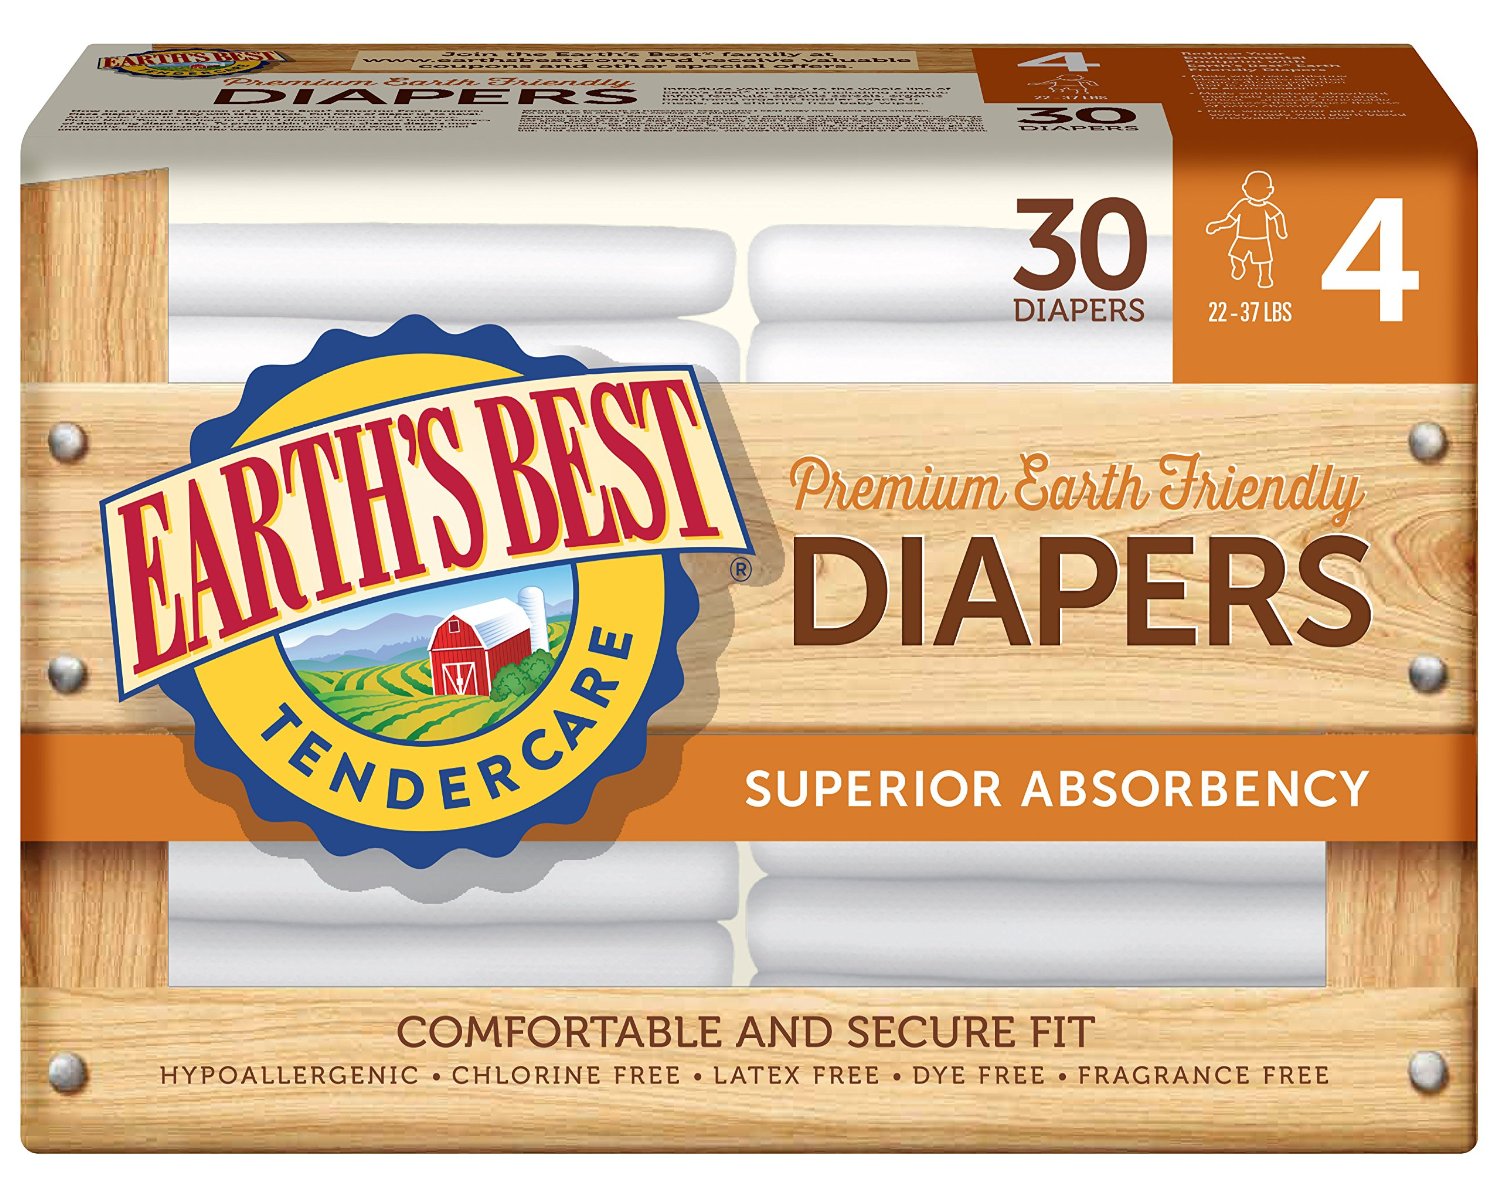 Best Diapers